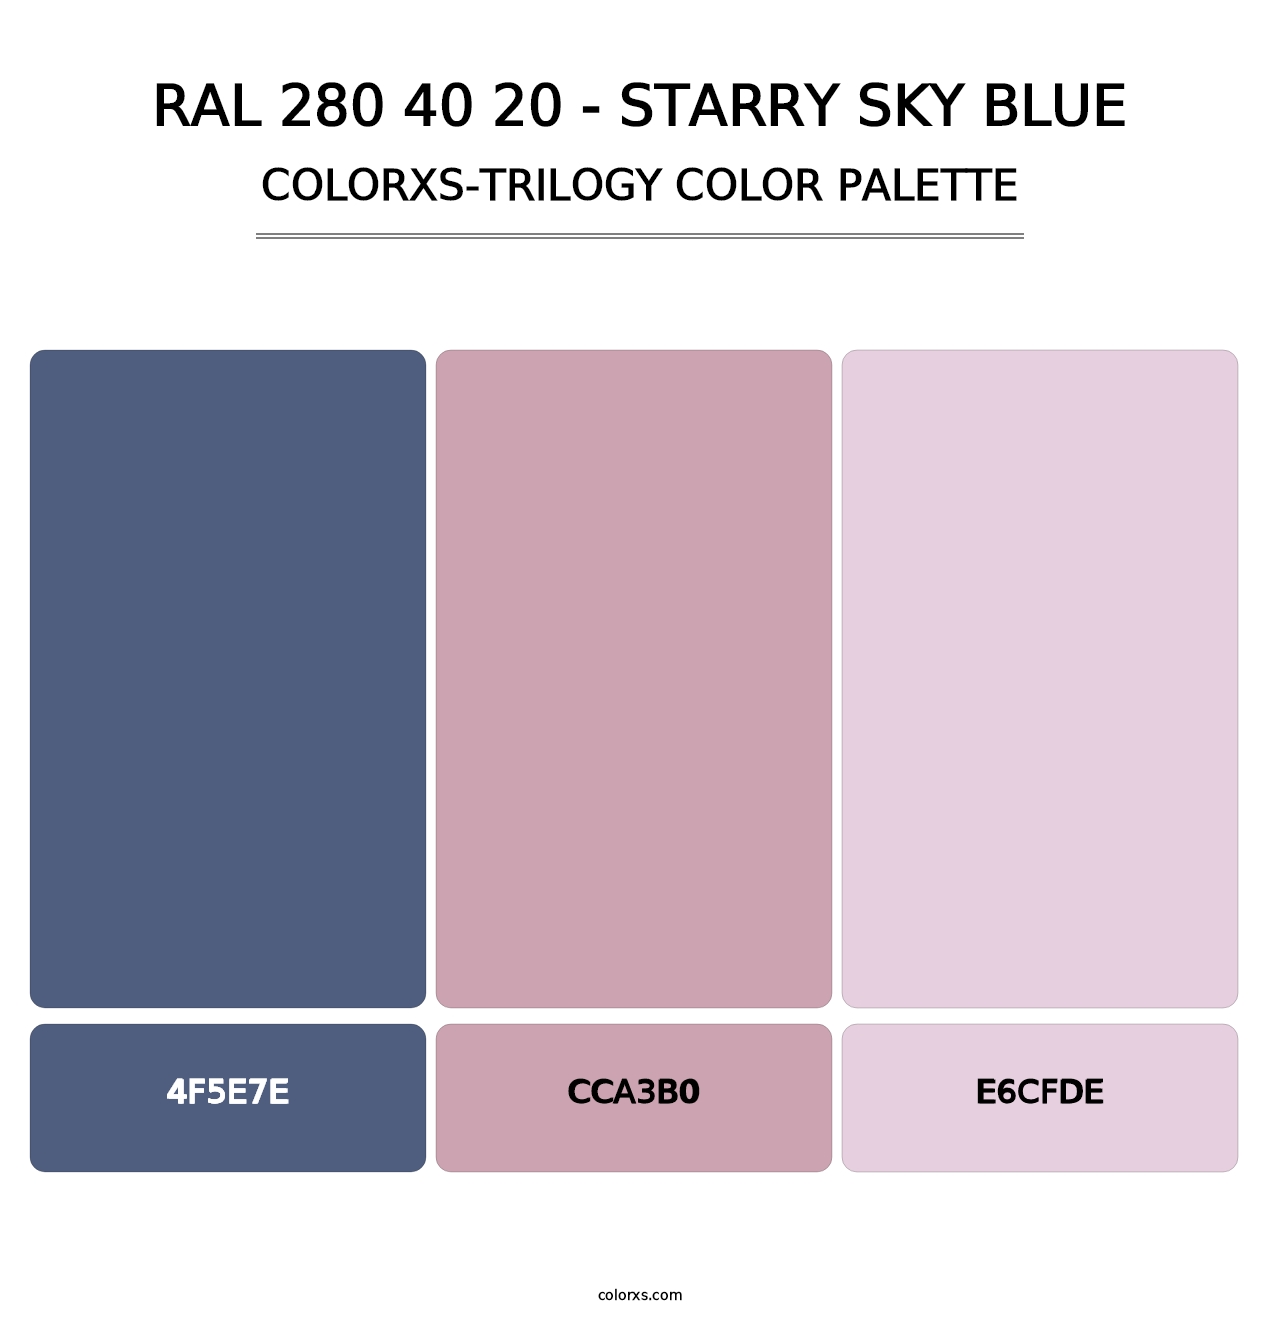 RAL 280 40 20 - Starry Sky Blue - Colorxs Trilogy Palette